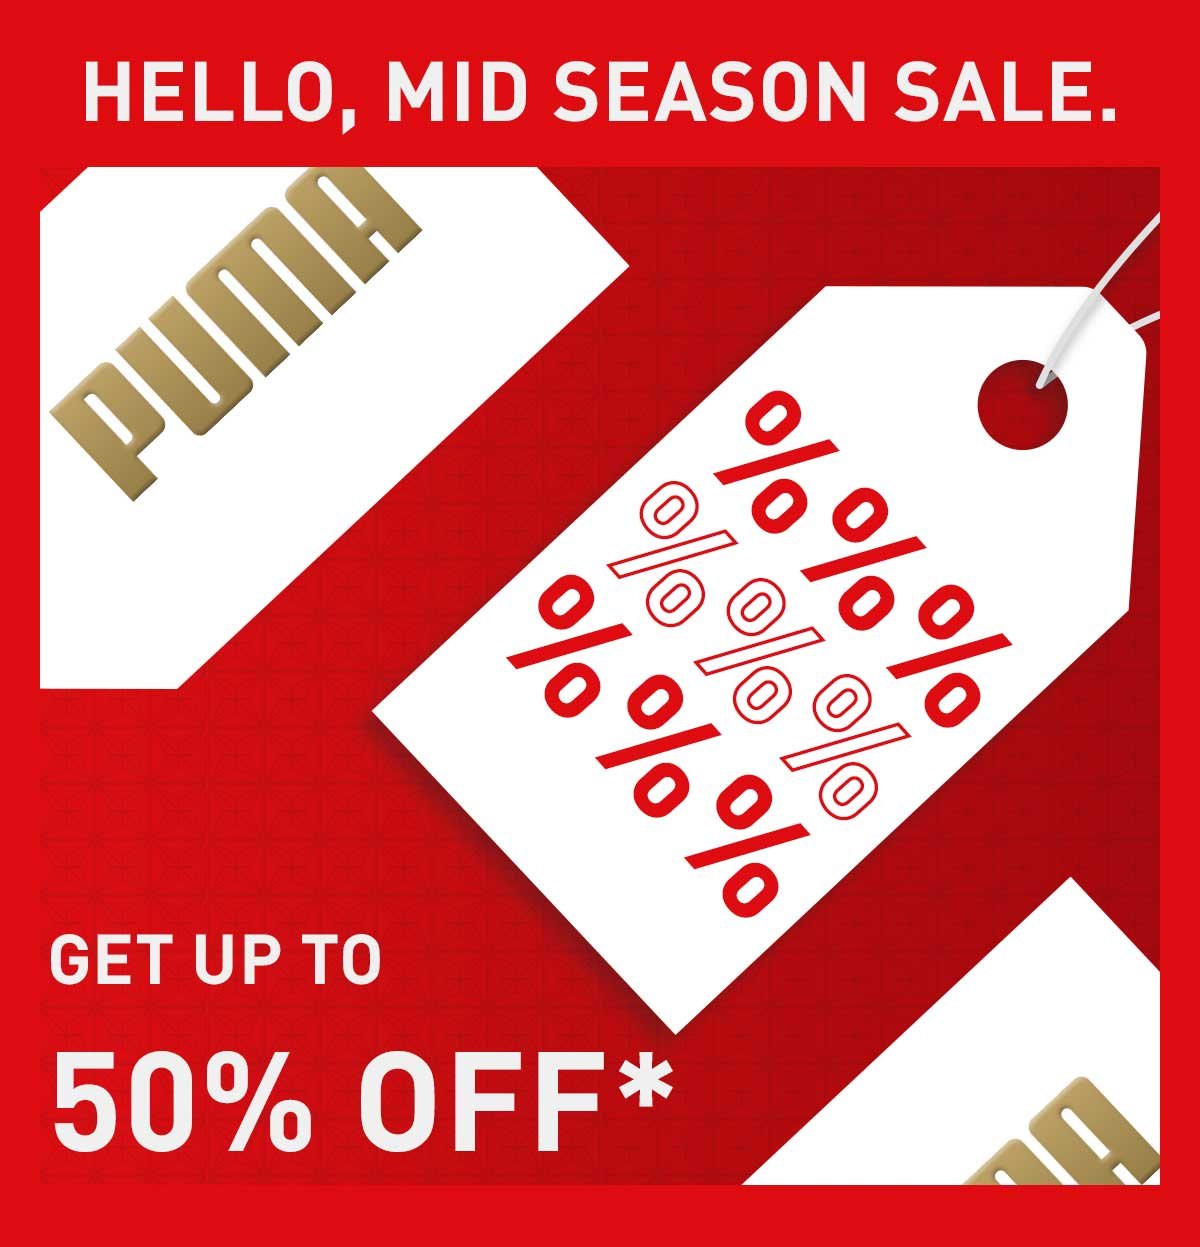 puma.co.uk: It's Mid Season Sale. Get 